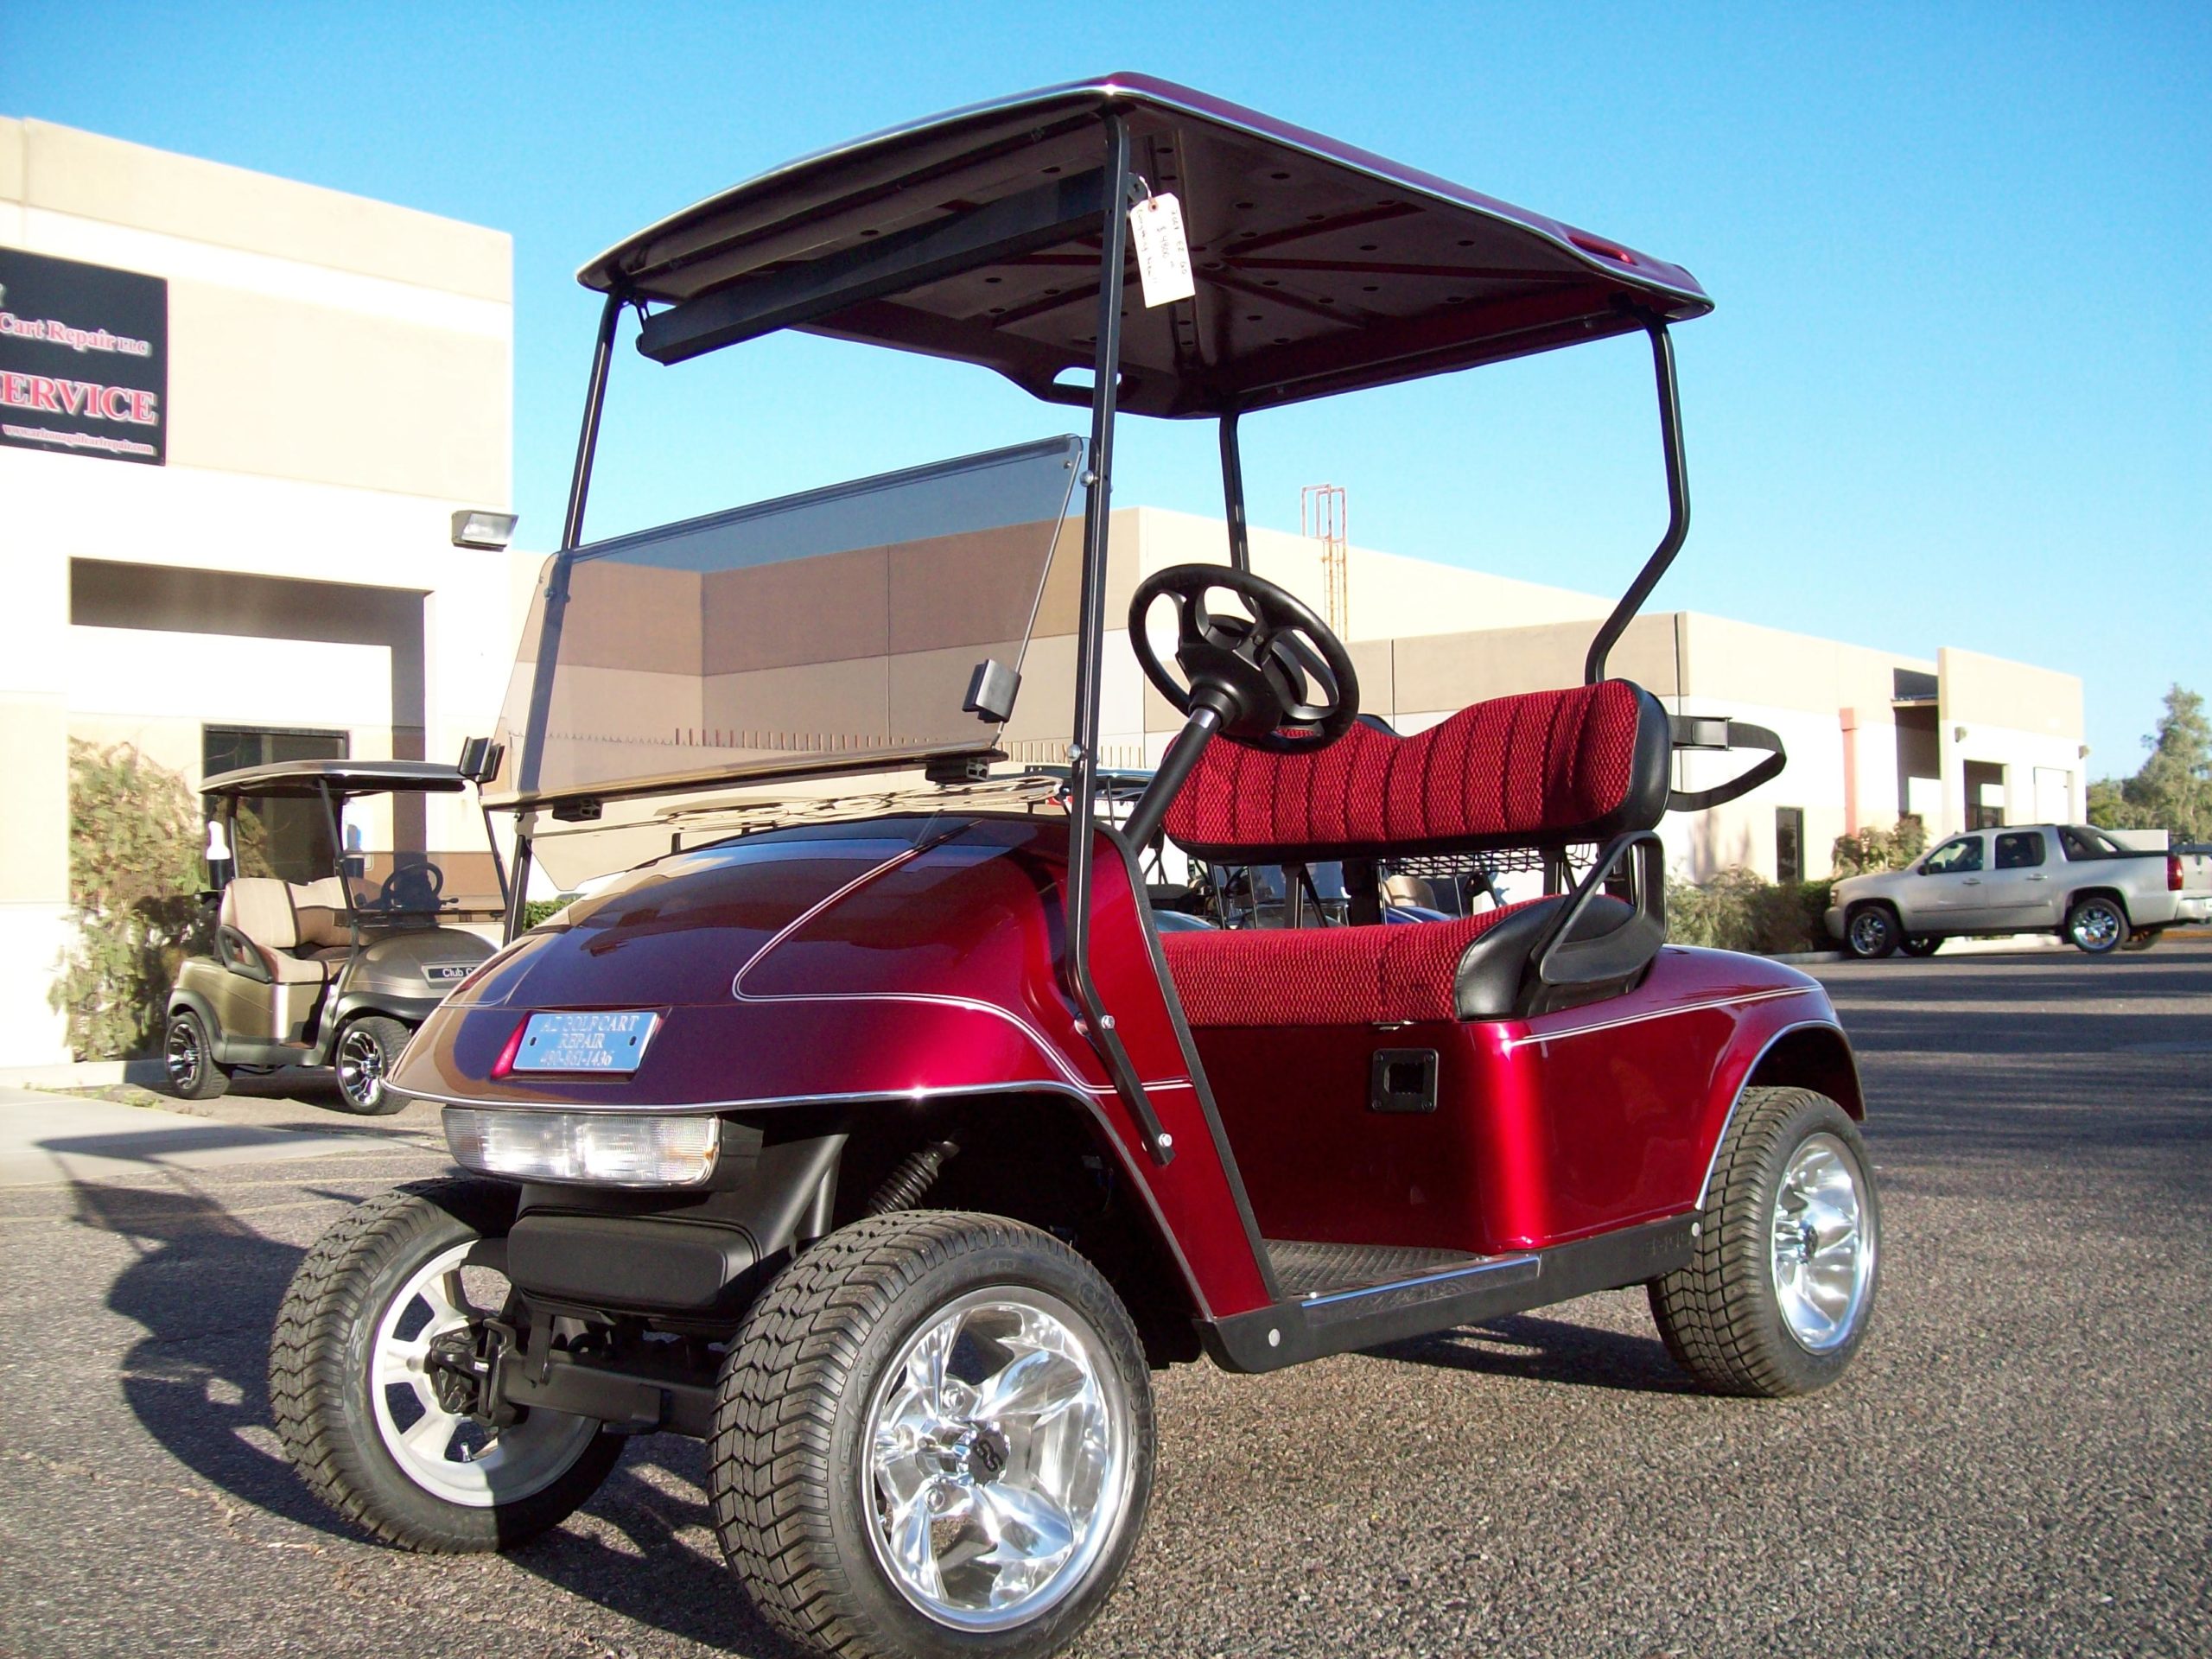 By the way triathlon Andes Rebuilt Golf Carts - Arizona Golf Cart Repair